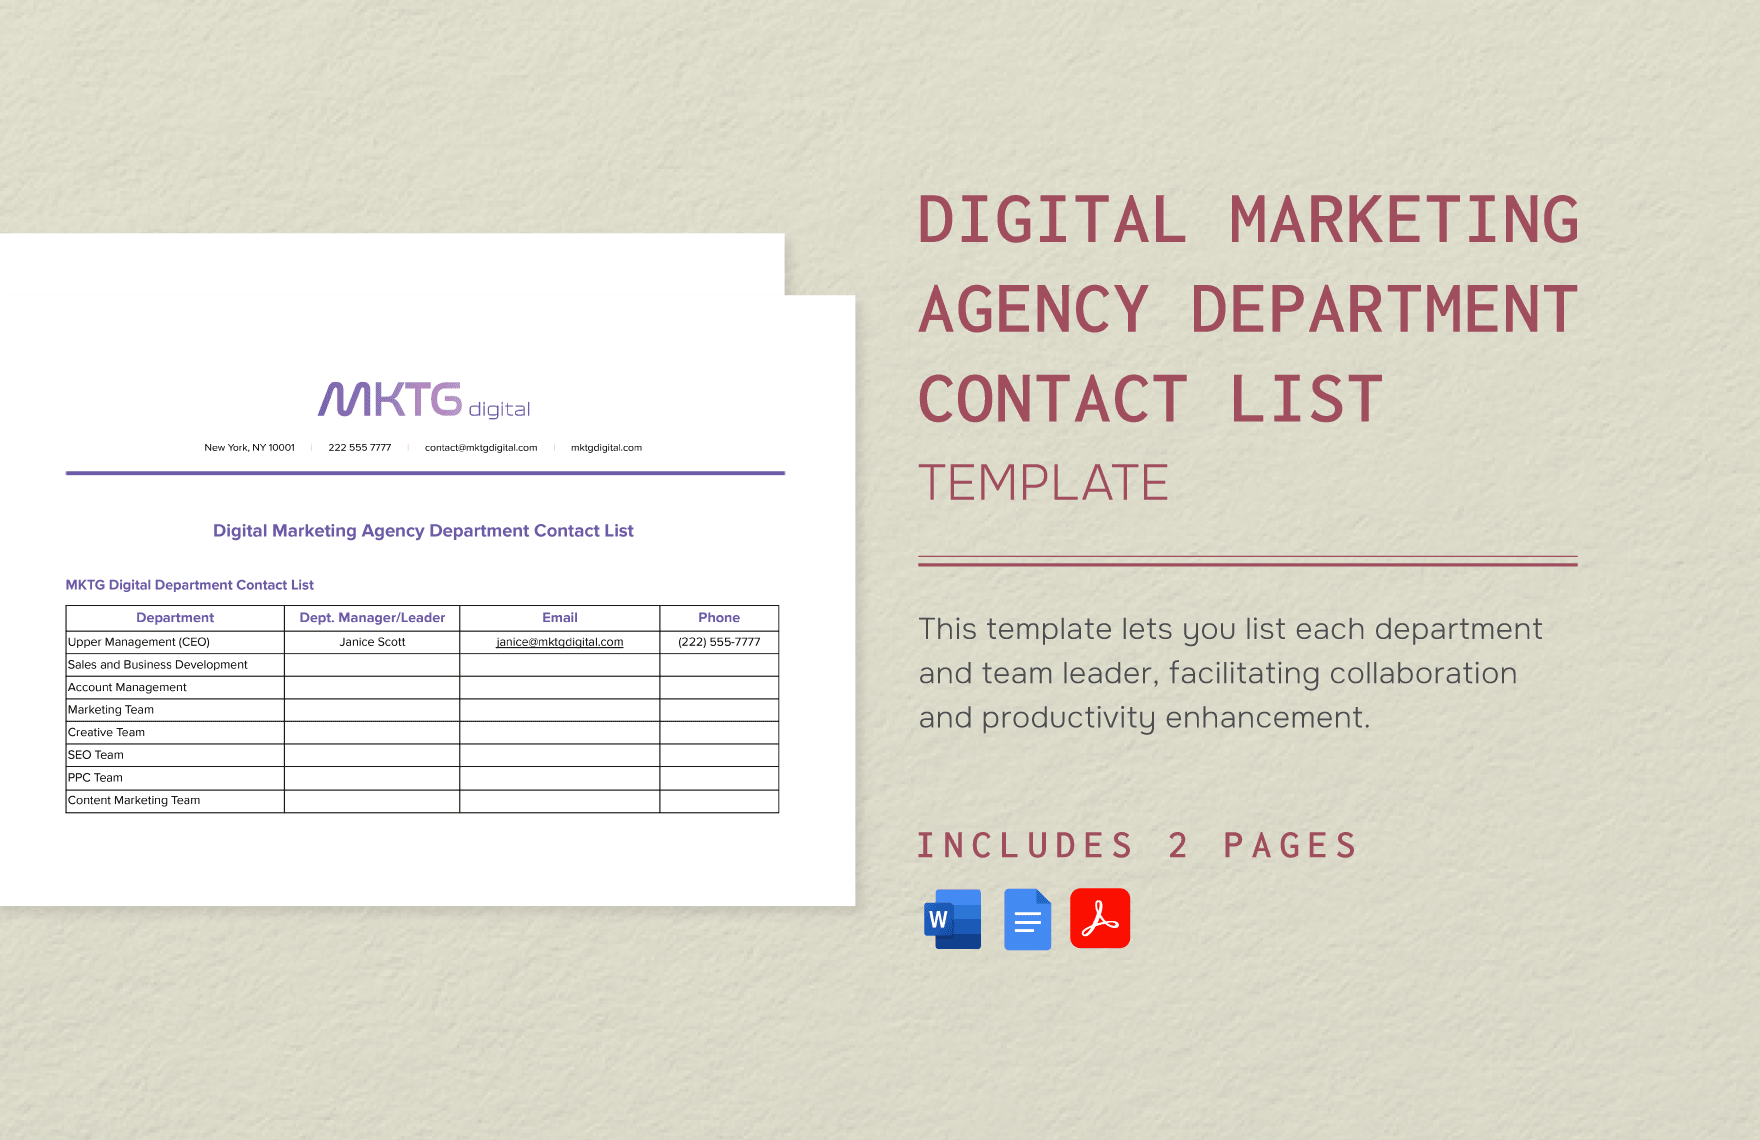 Digital Marketing Agency Department Contact List Template